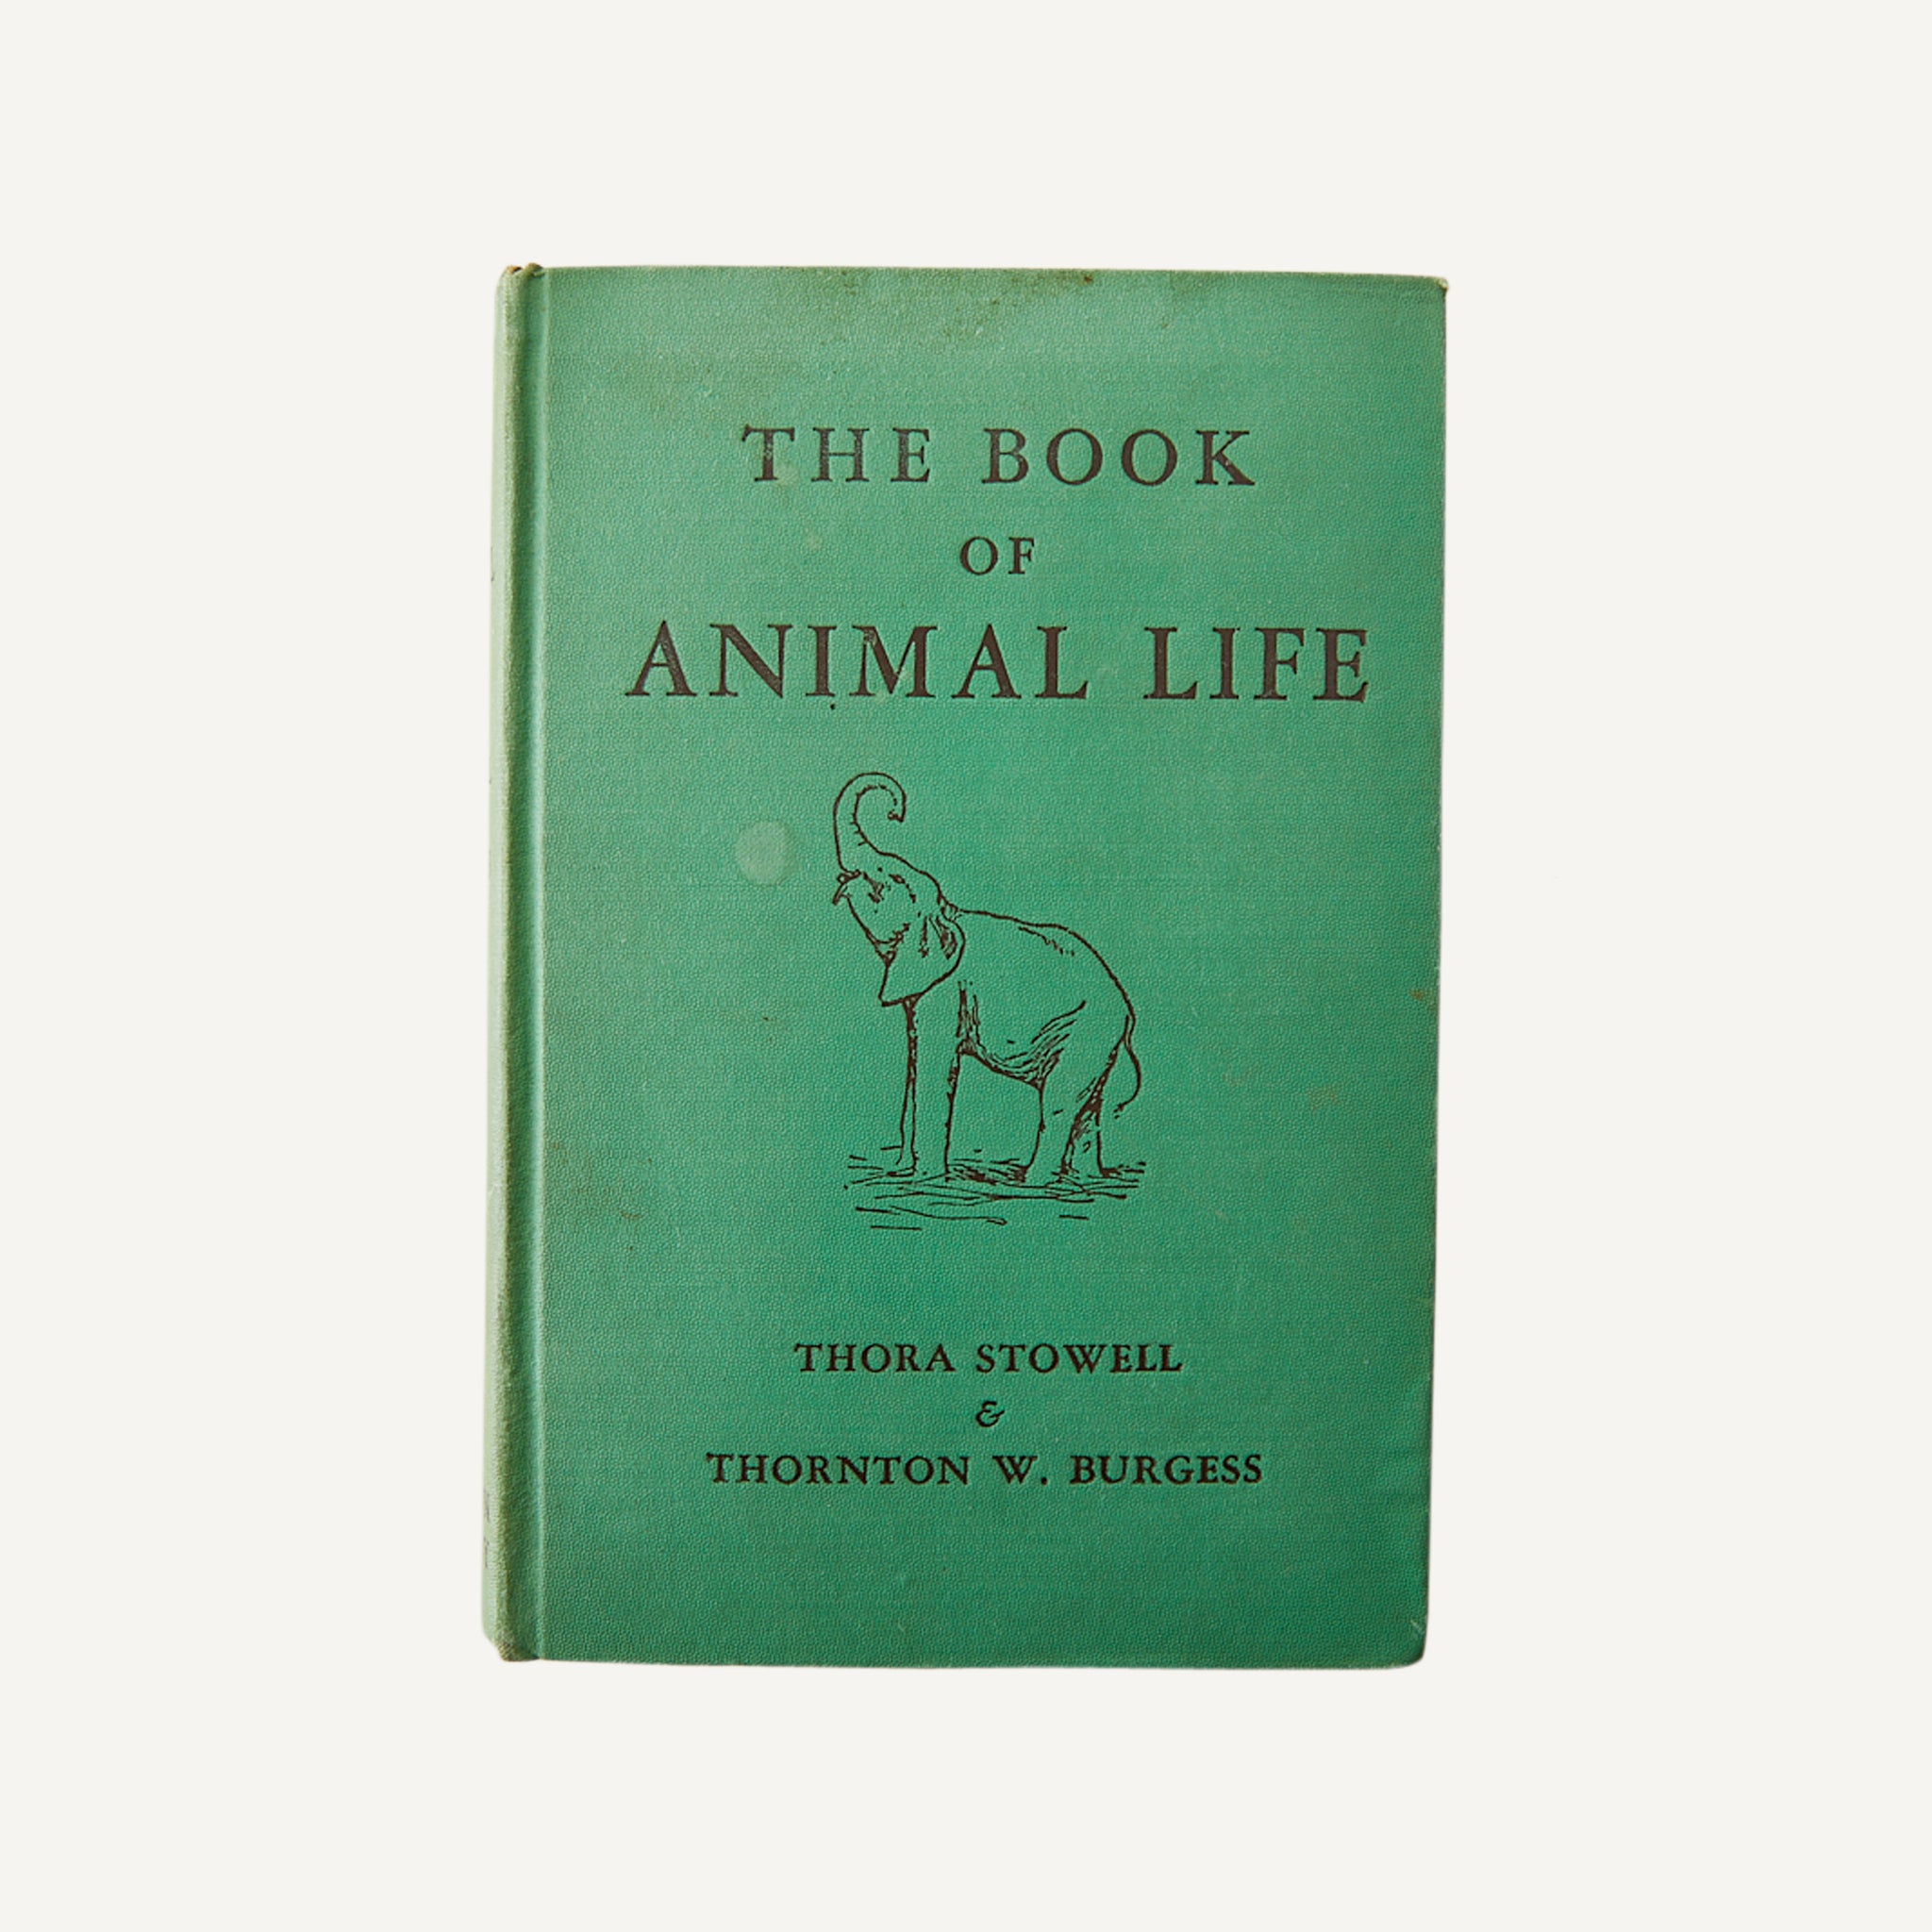 VINTAGE "ANIMAL LIFE" BOOK